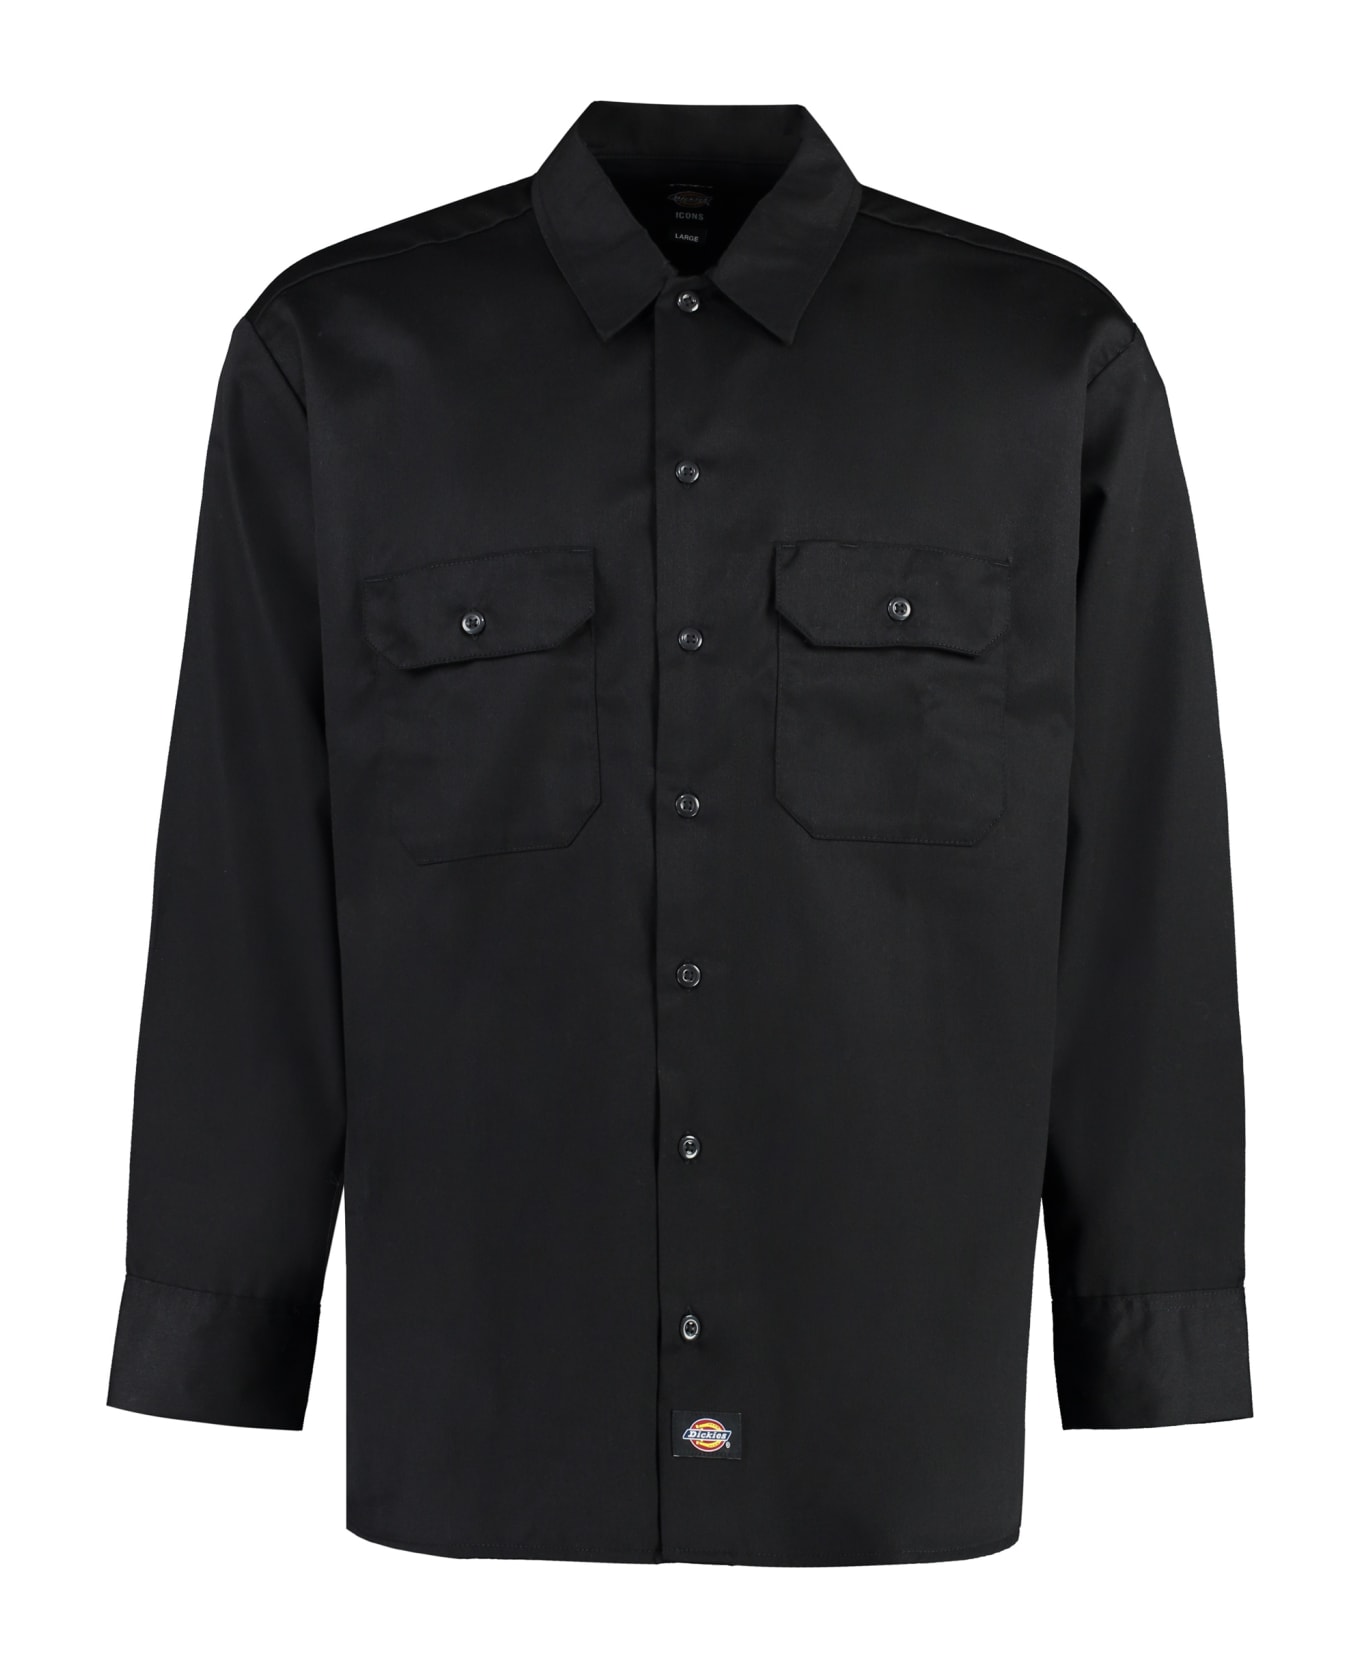 Dickies Long Sleeve Cotton Blend Shirt - black